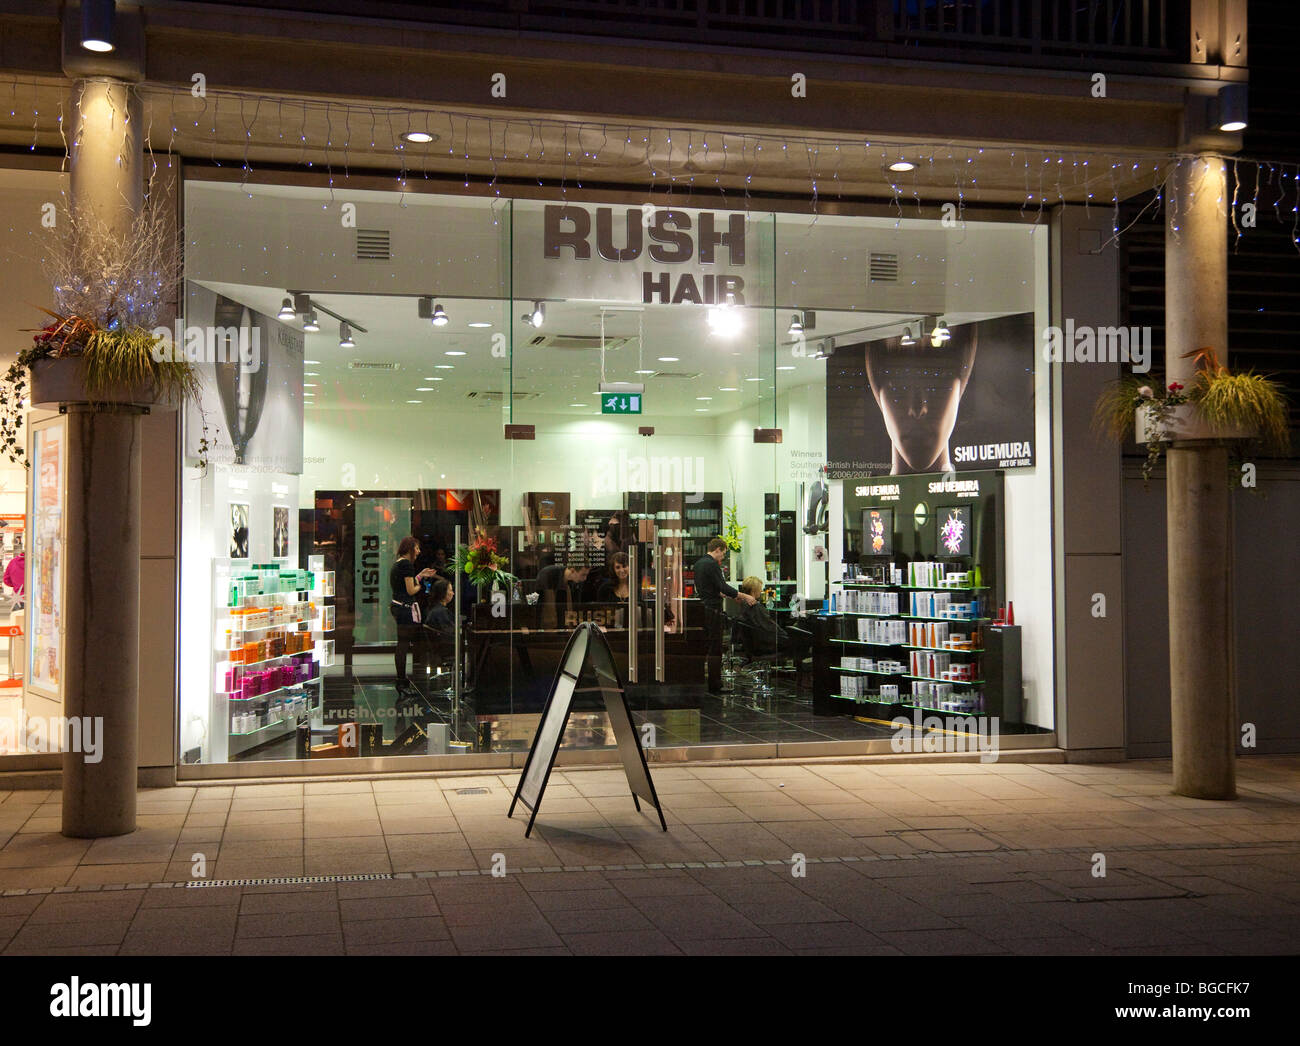 Rush hairdressers shop Stock Photo - Alamy